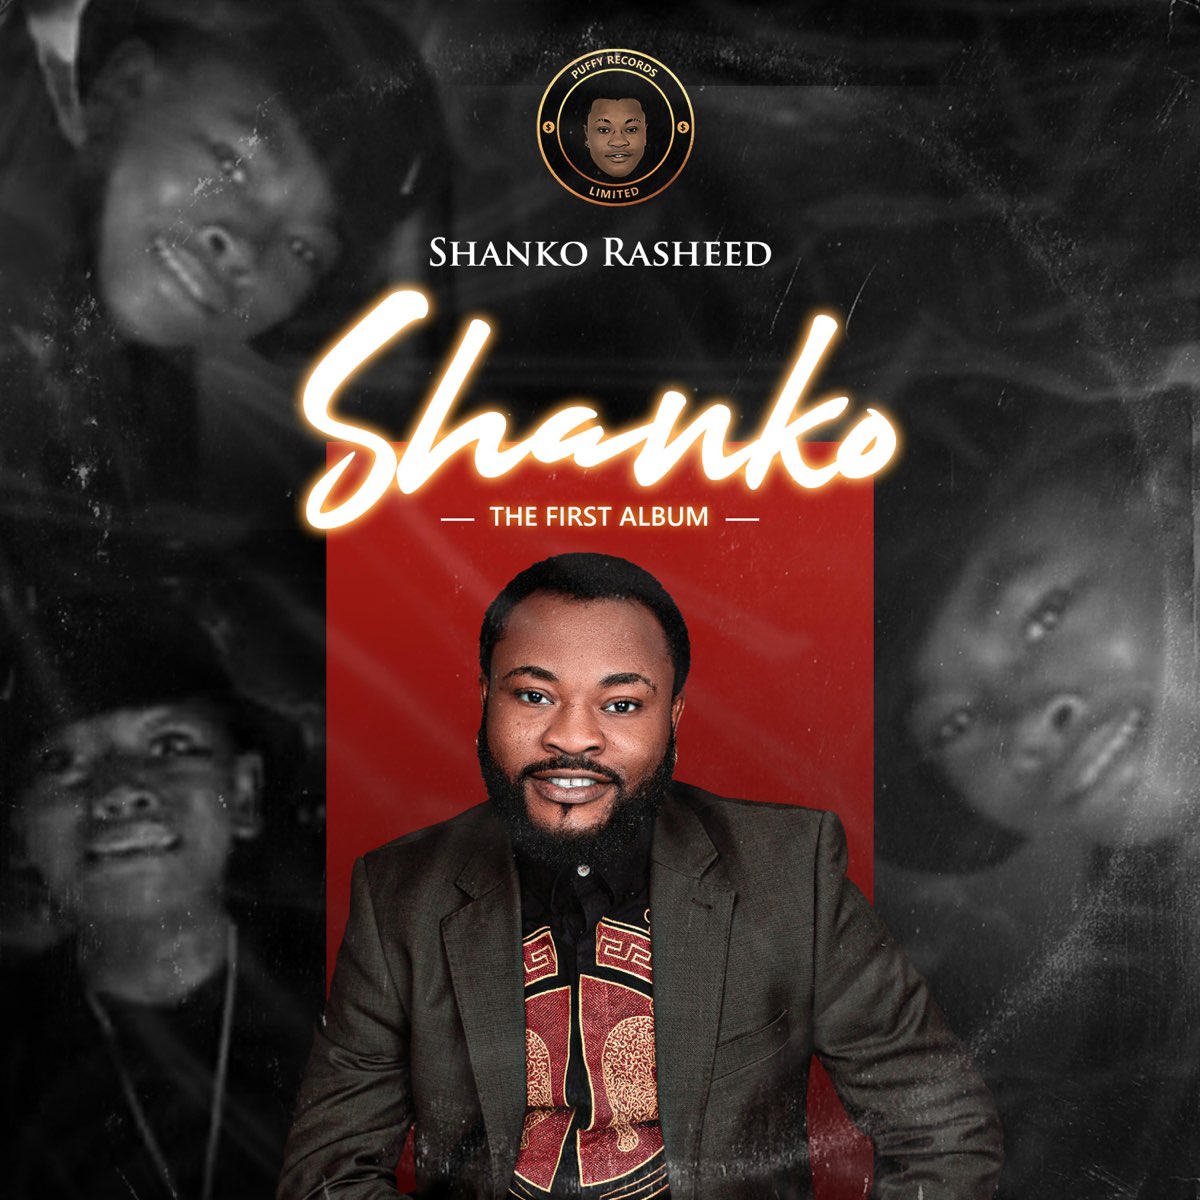 Shanko (The First Album) by Shanko Rasheed on Apple Music